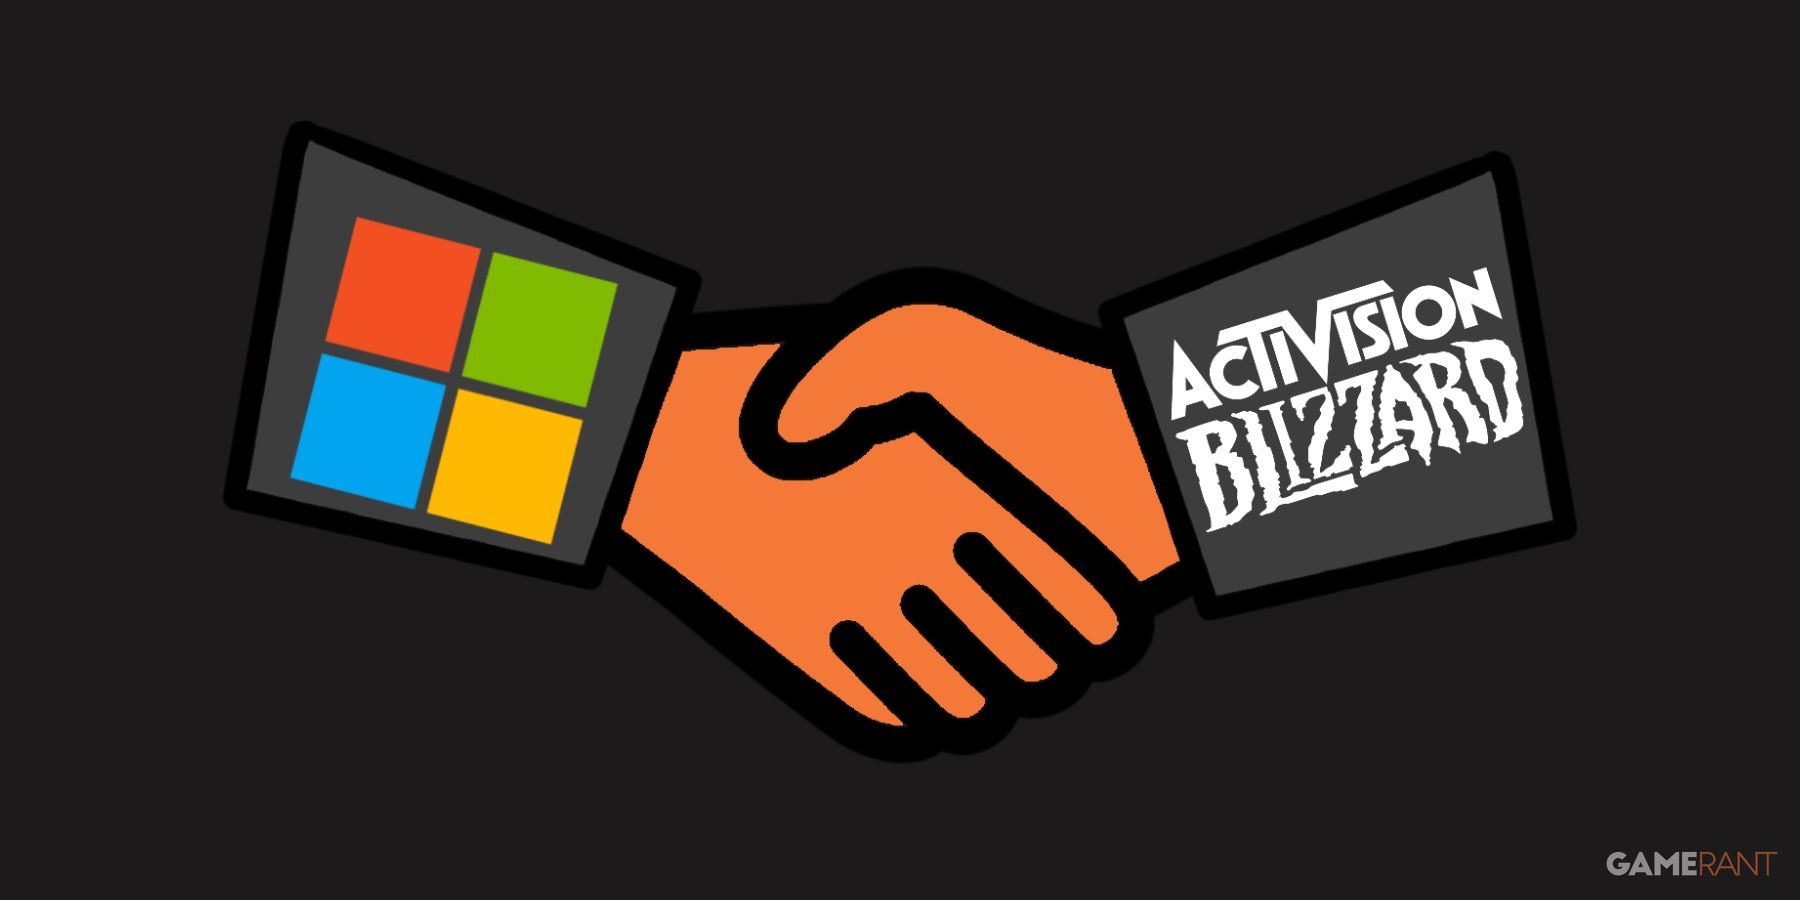 Microsoft Activision Blizzard Acquisition Handshake Agreement GR illustration